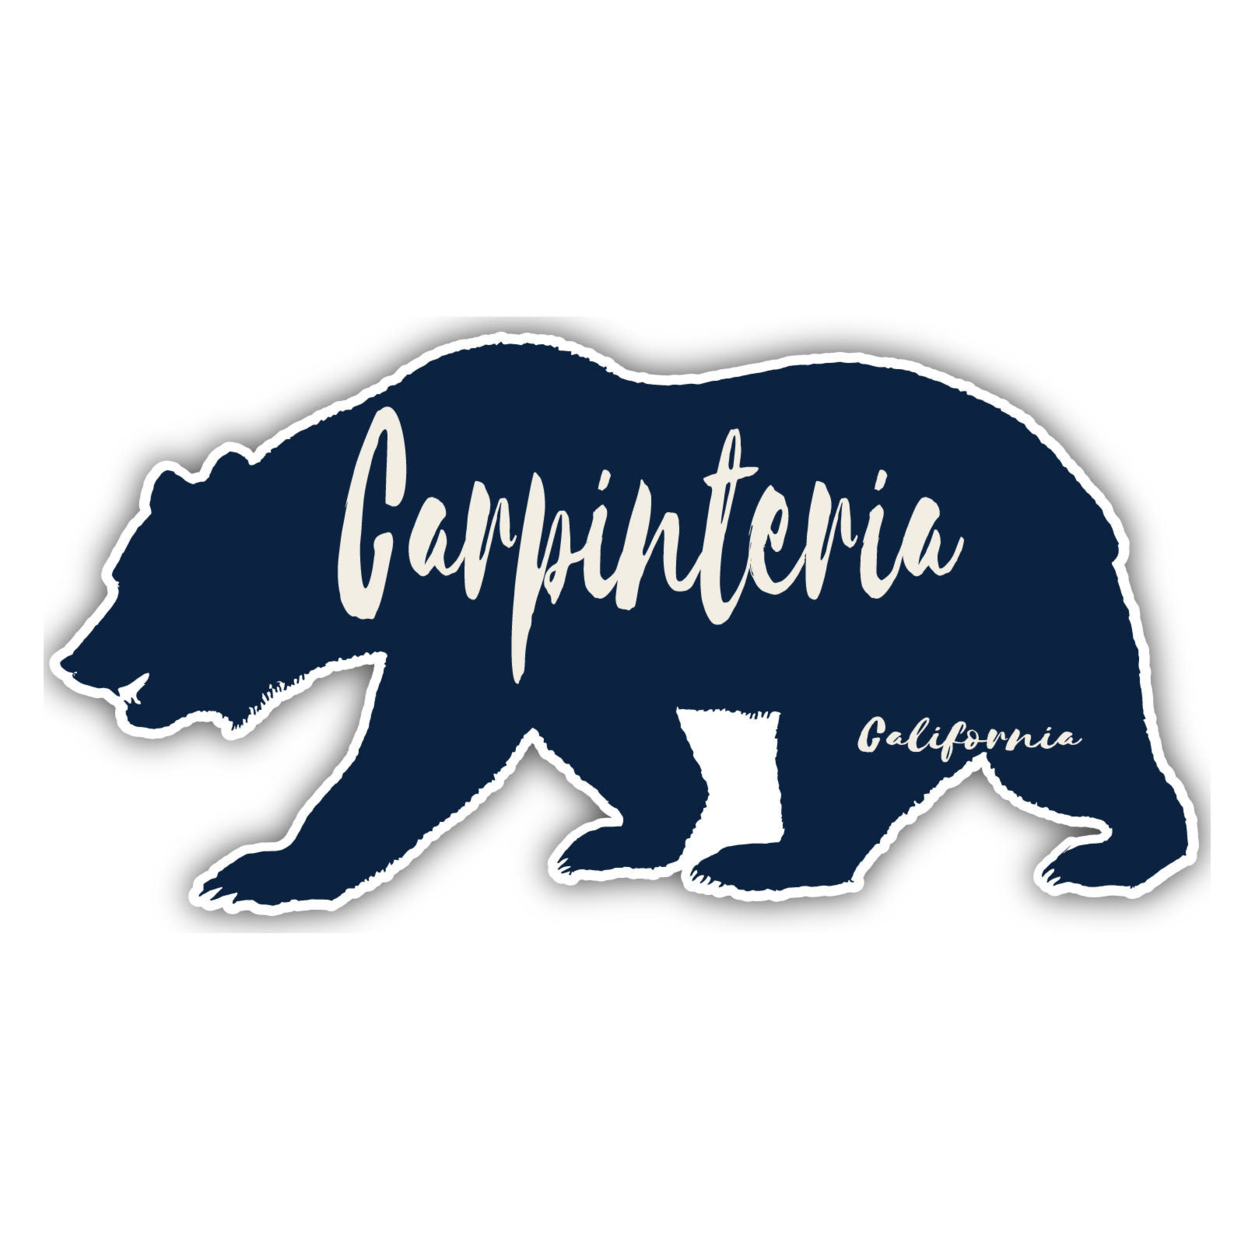 Carpinteria California Souvenir Decorative Stickers (Choose Theme And Size) - 4-Pack, 12-Inch, Bear